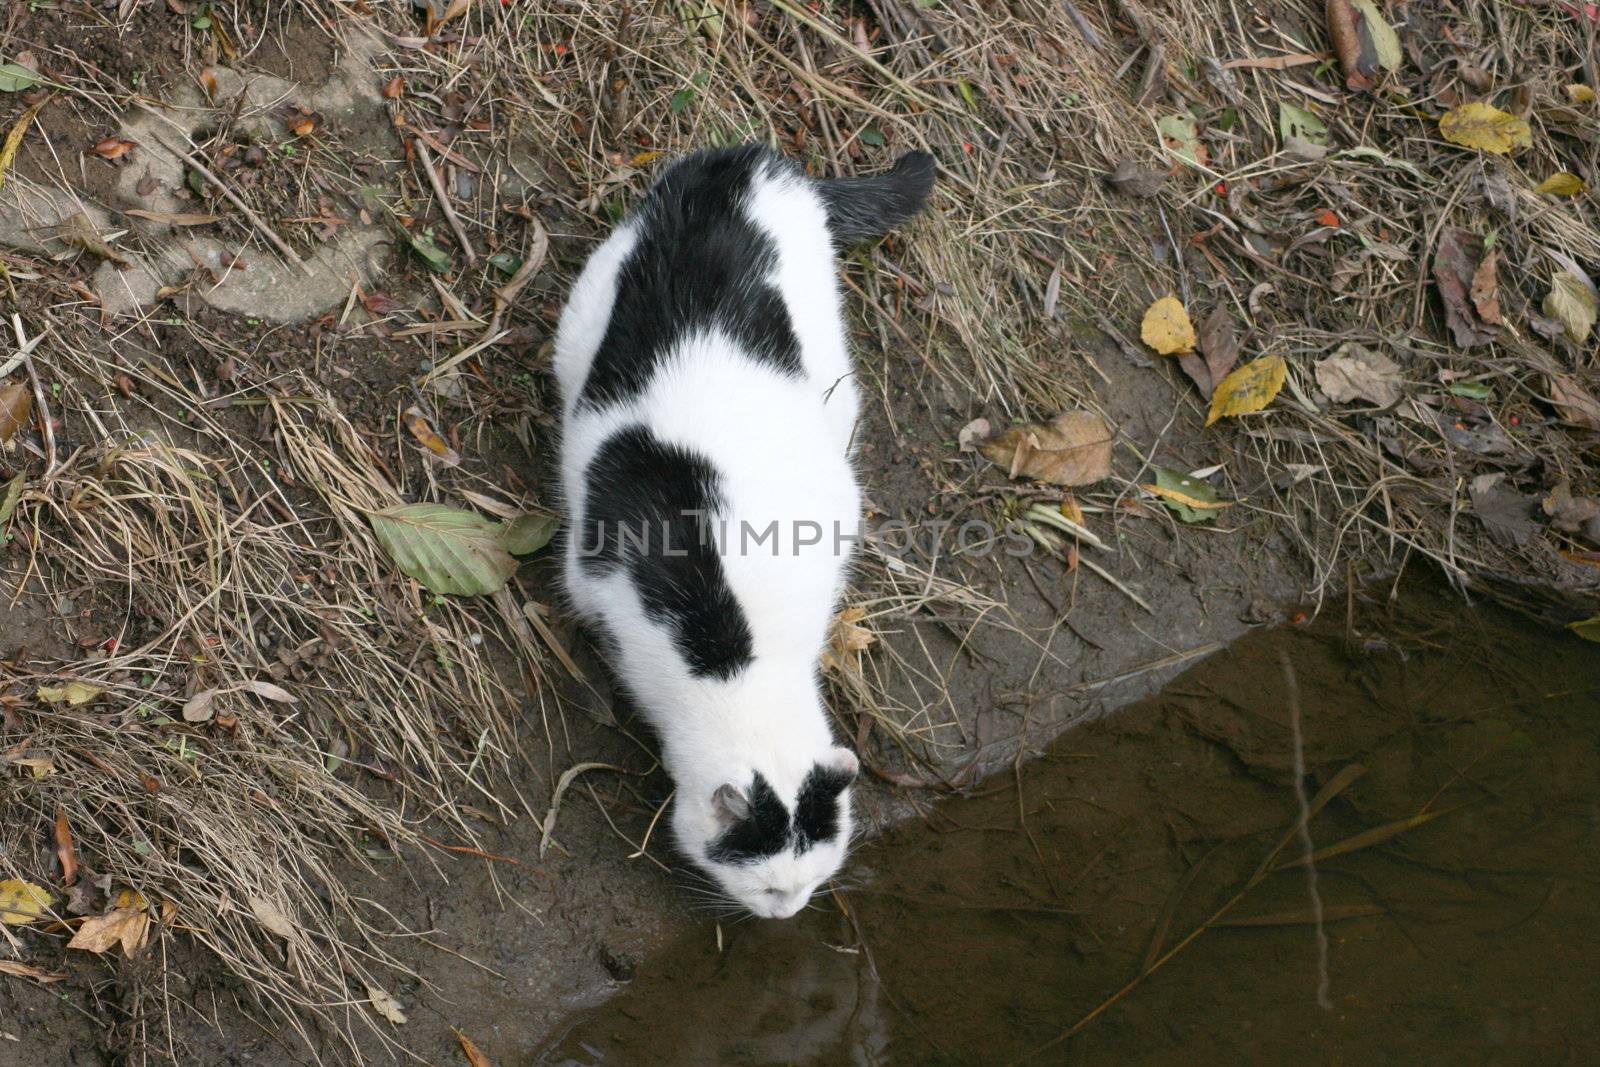 Katze beim Beute beobachten am Wasser	
Cat watching the prey at the water